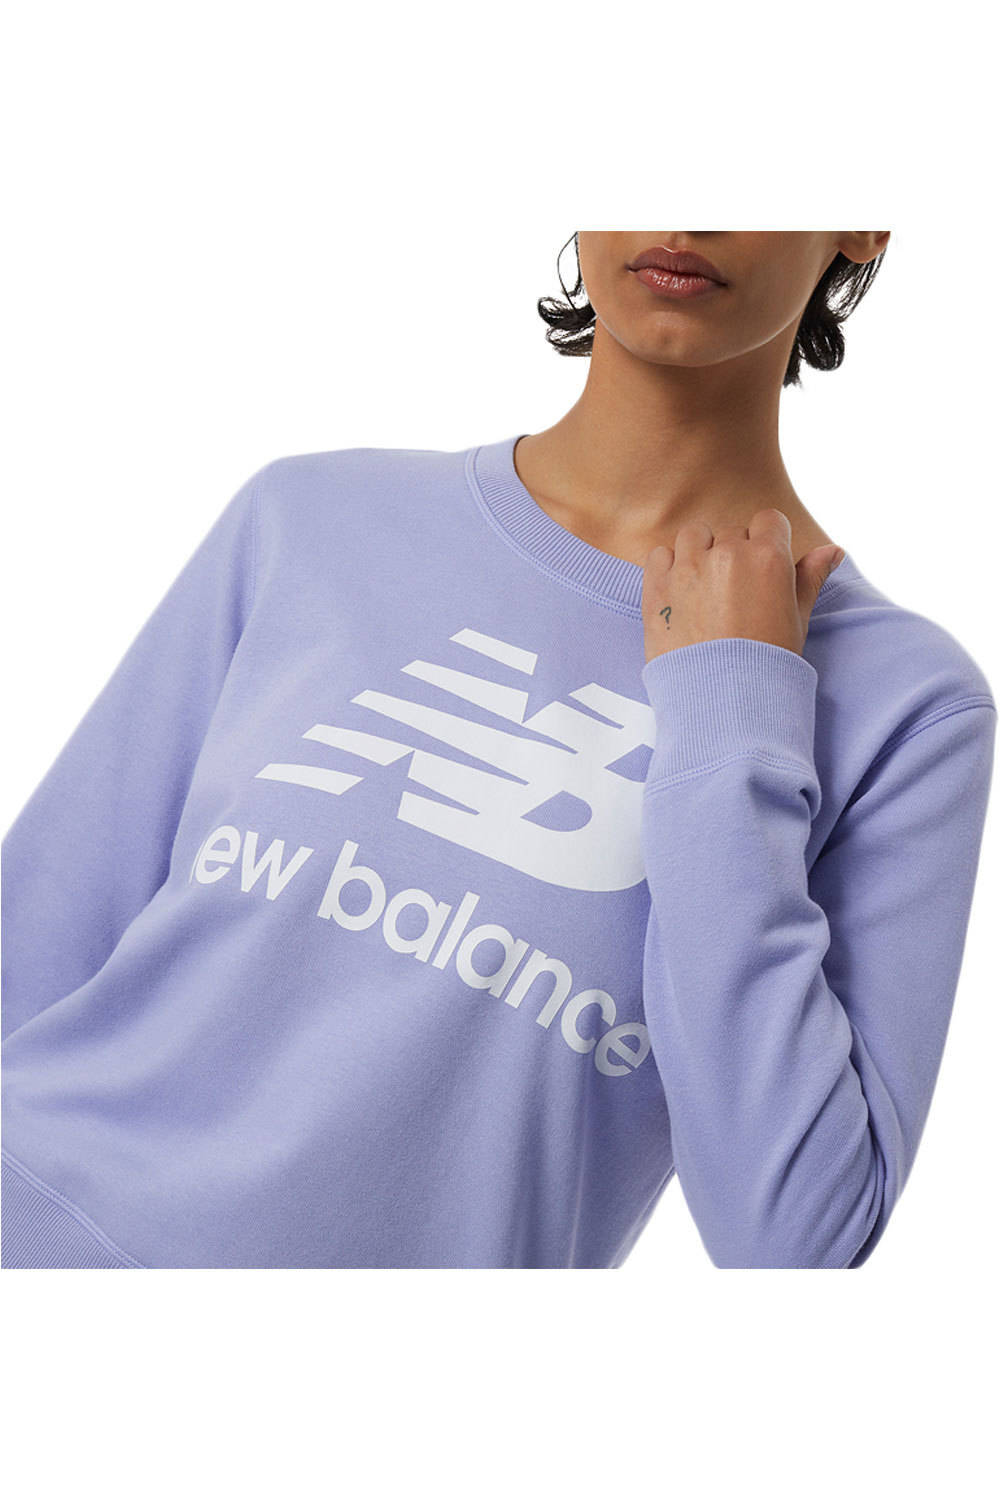 New Balance sudadera mujer NB Essentials Crew Fleece vista detalle